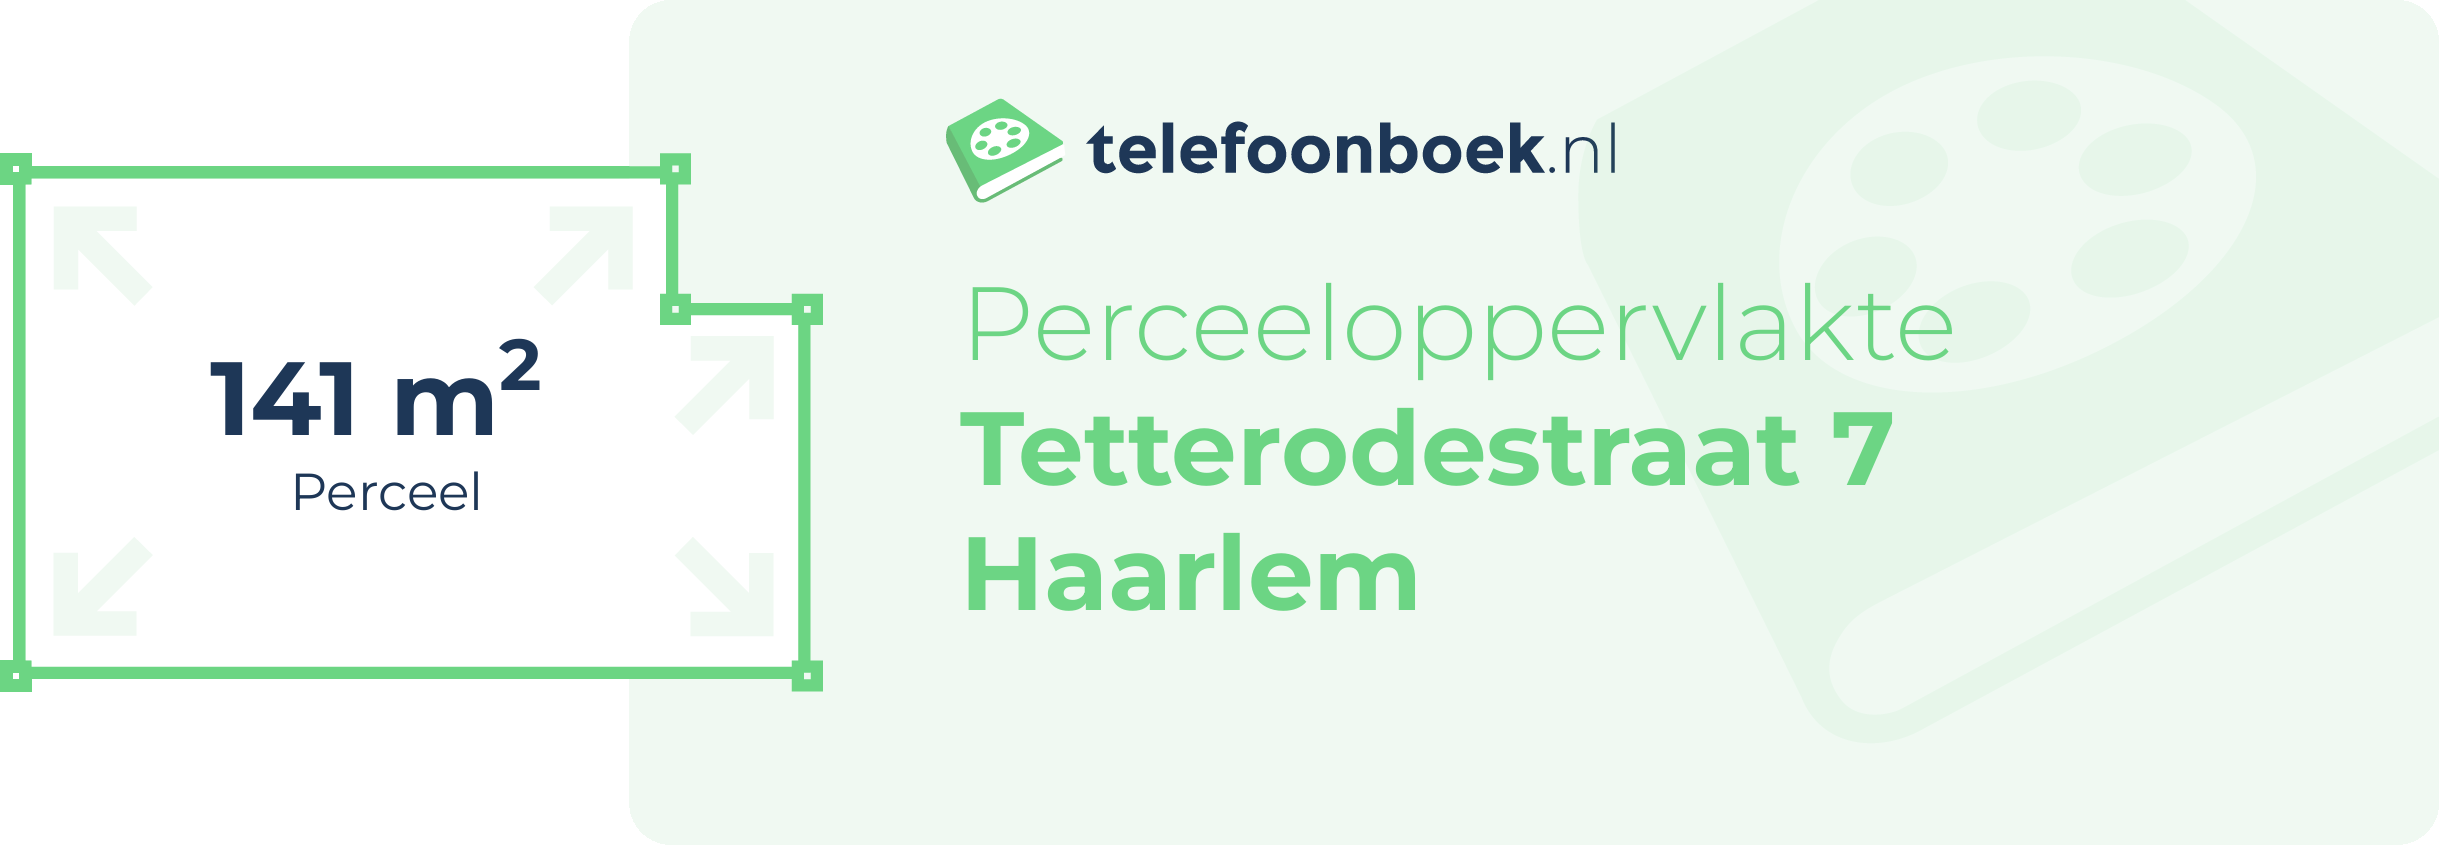 Perceeloppervlakte Tetterodestraat 7 Haarlem